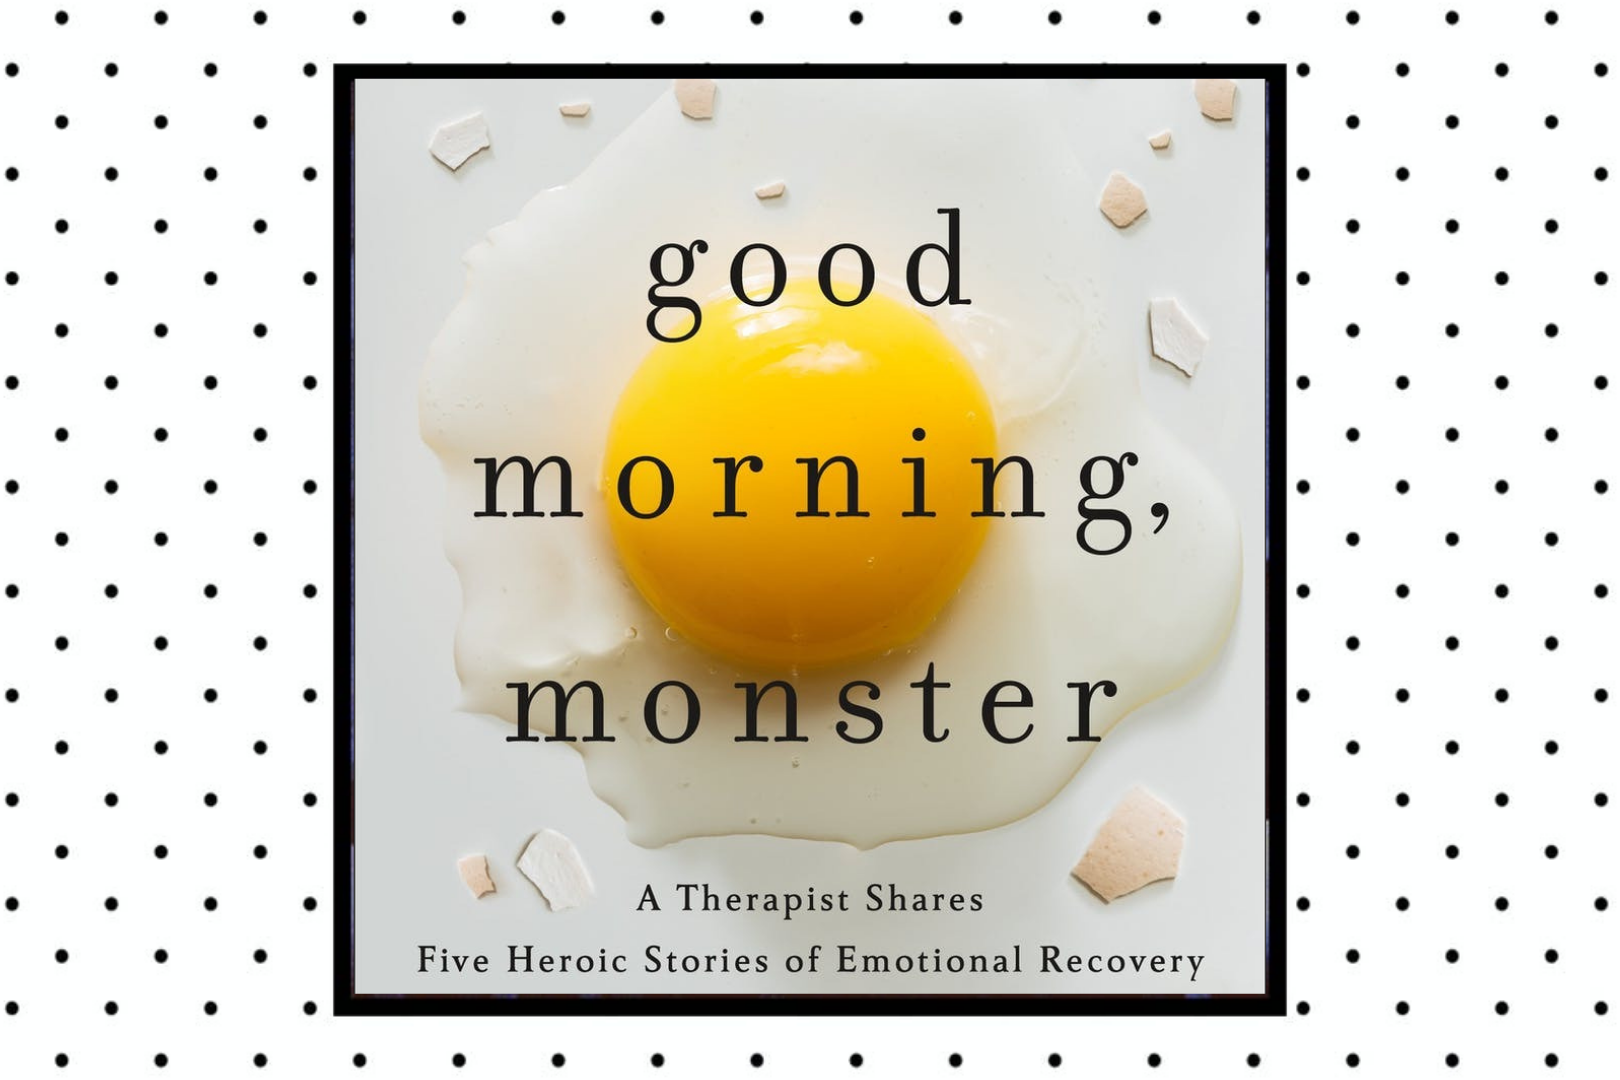 Good Morning, Monster by Catherine Gildiner